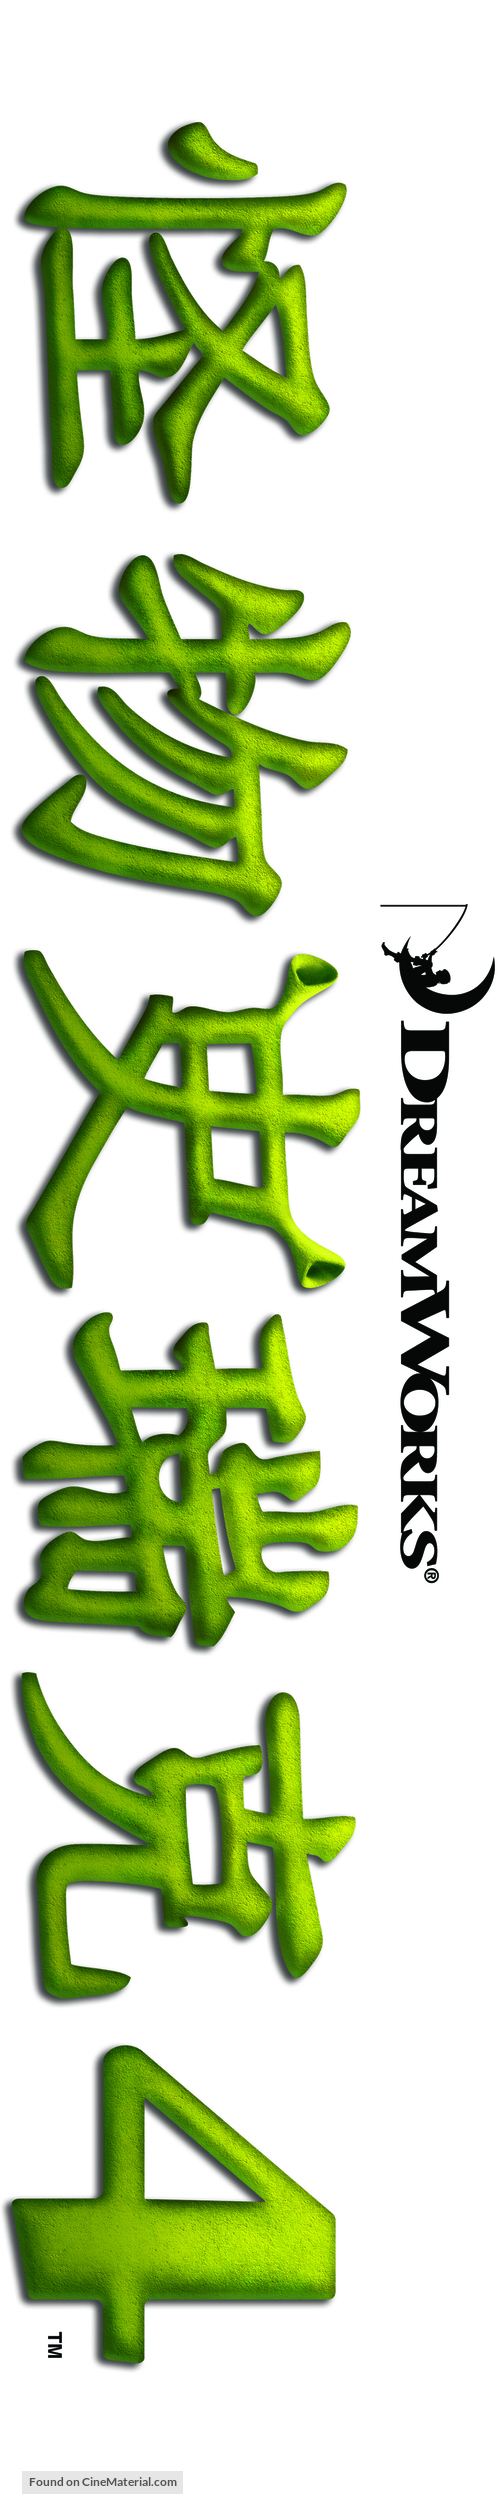 Shrek Forever After - Chinese Logo